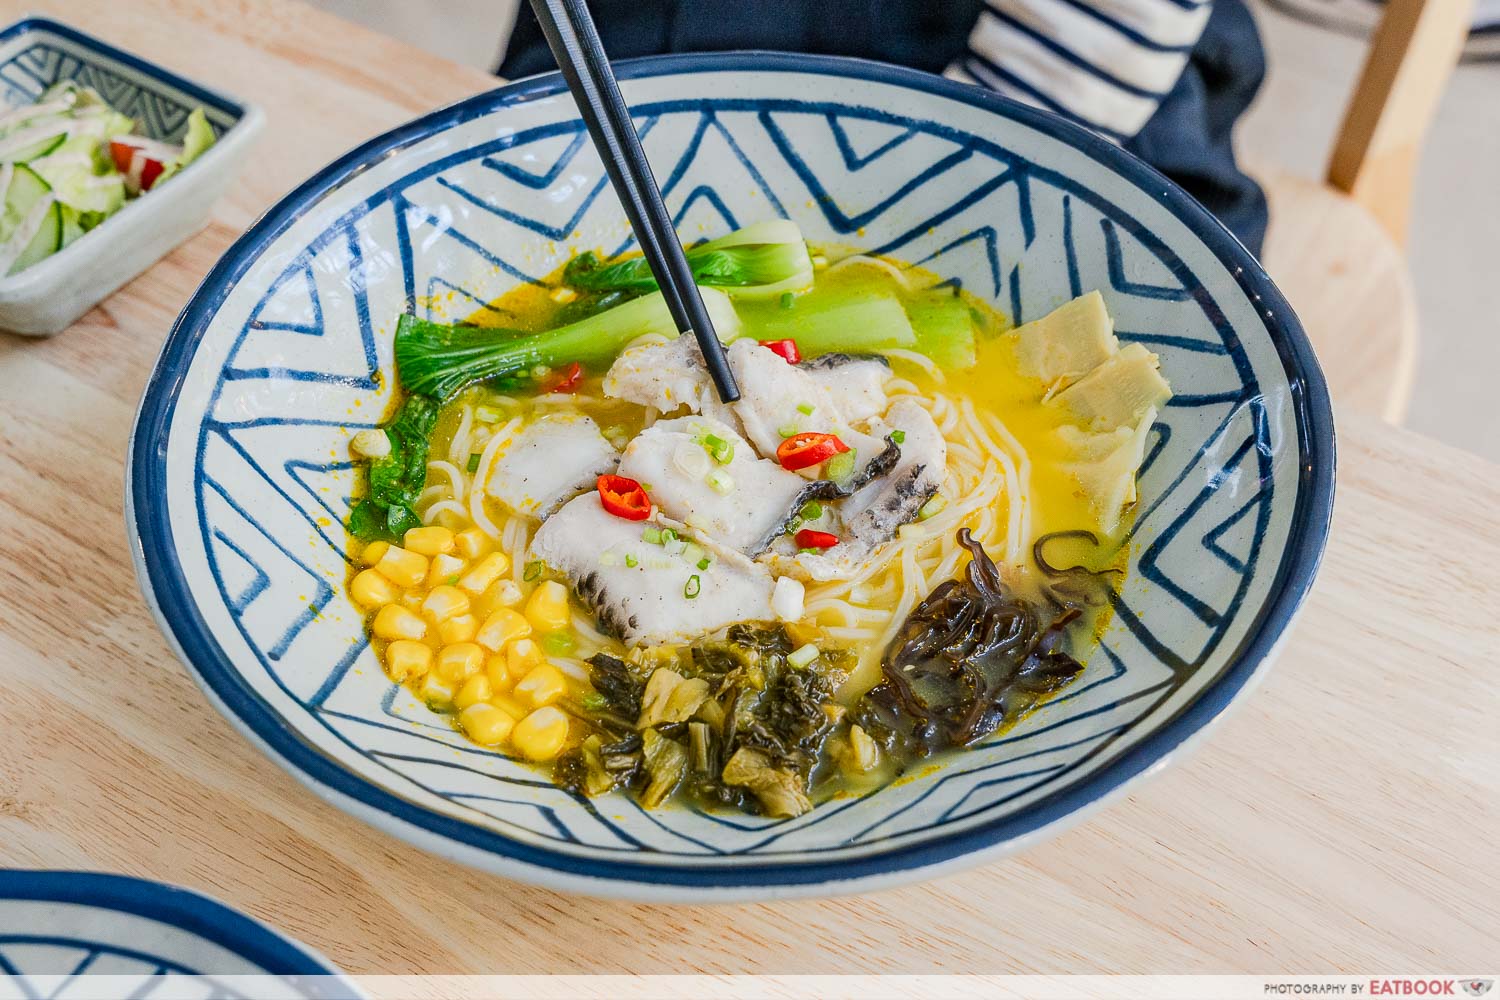 Qing-Shan-Dao-suan-cai-noodles